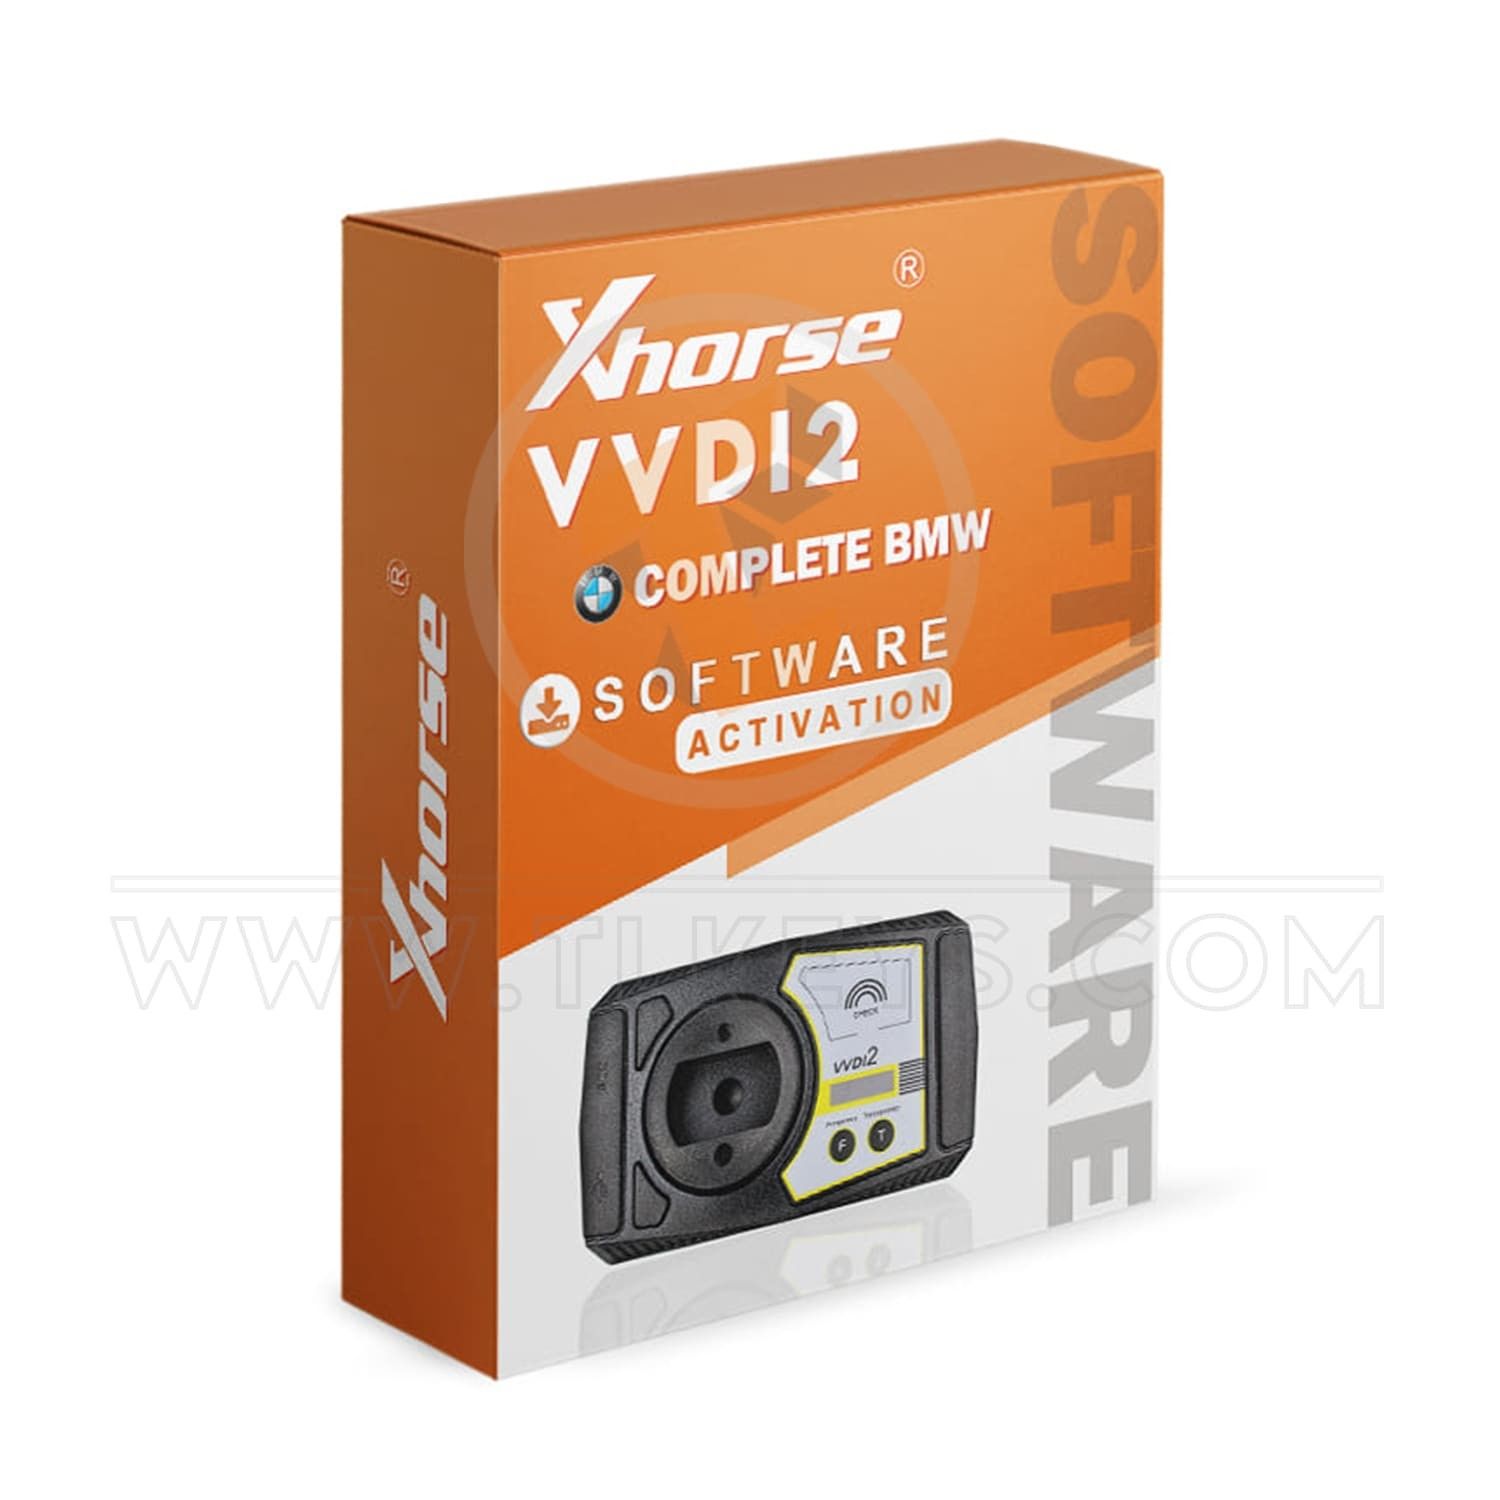 Xhorse VVDI2 Complete BMW Software Activation software